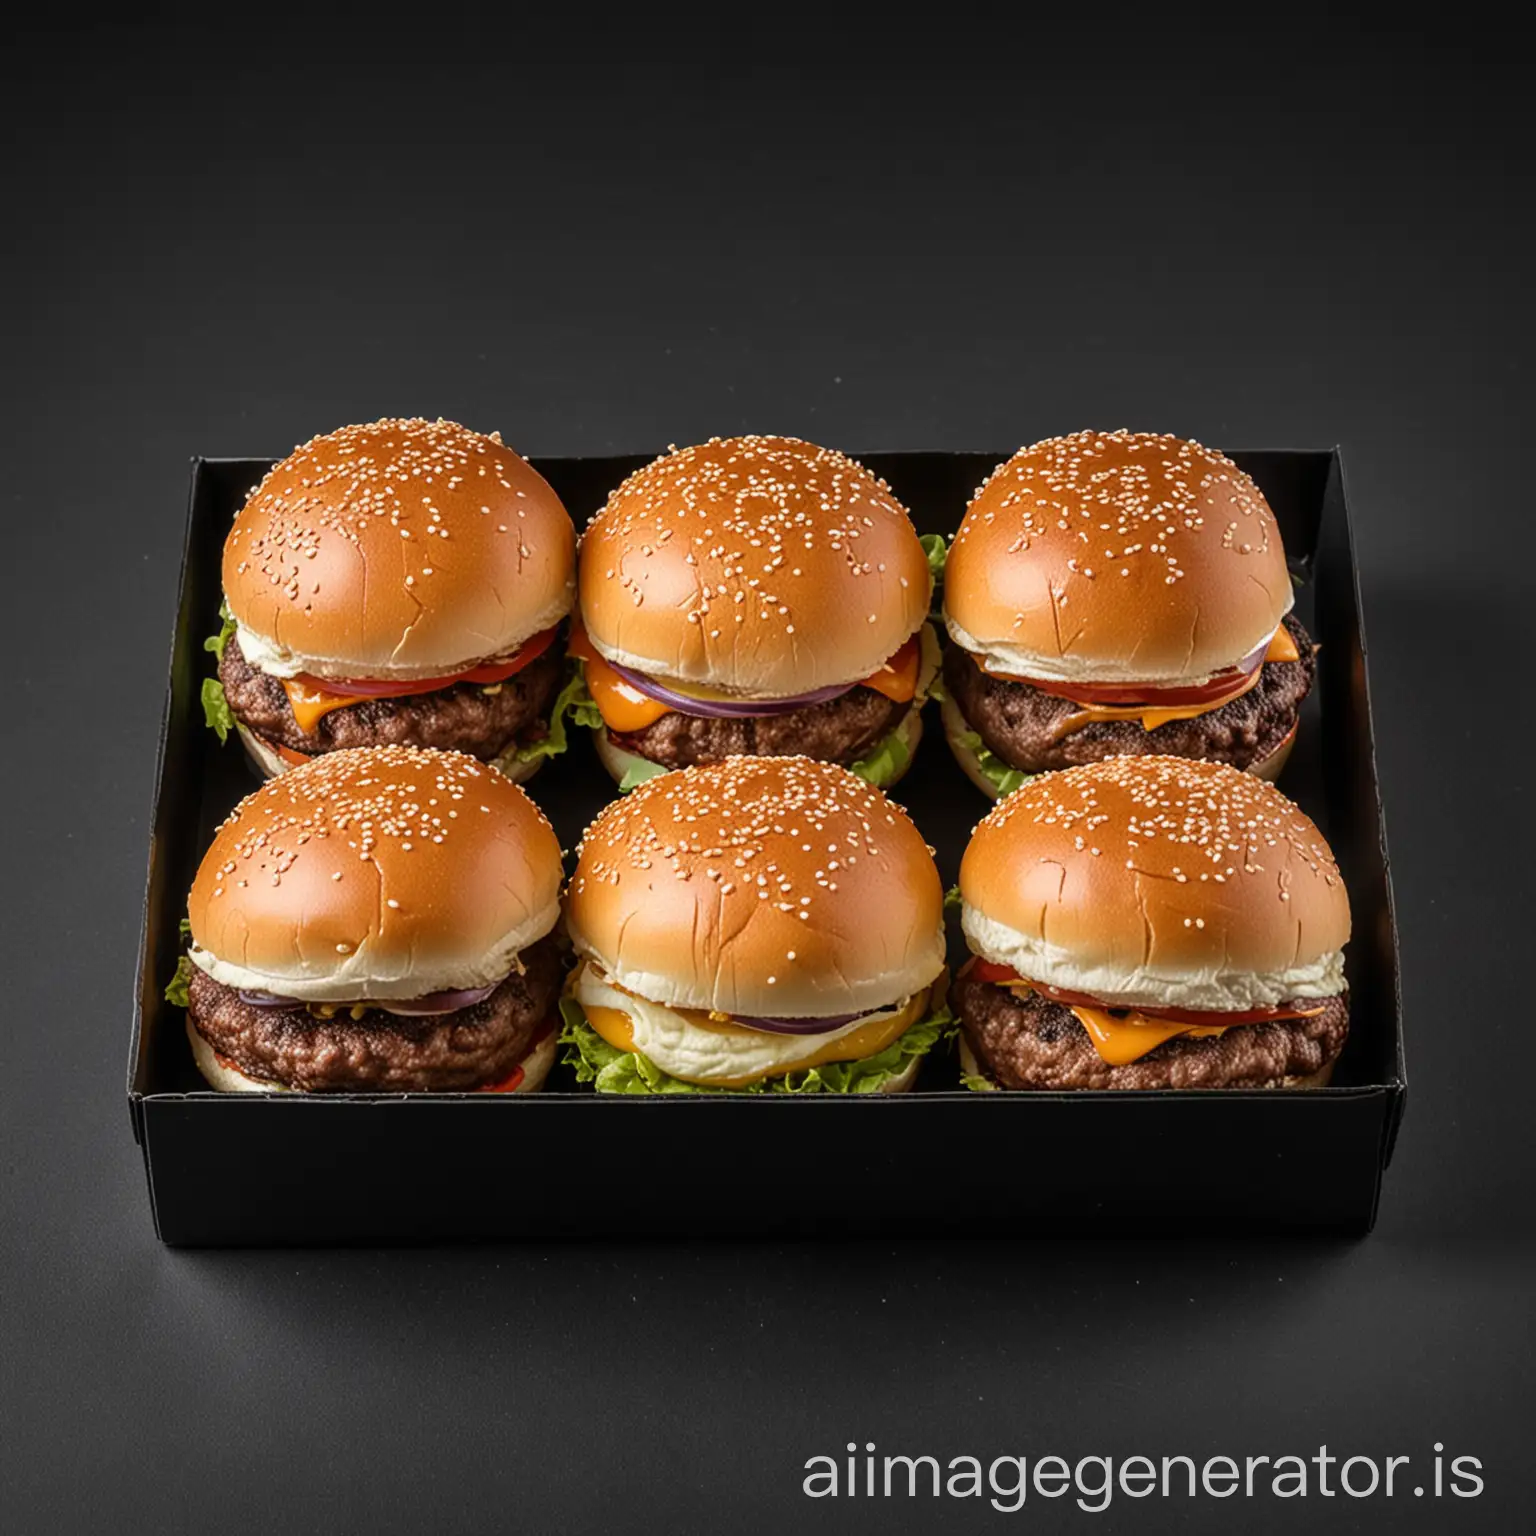 6 sliders burger on a black box on a black background